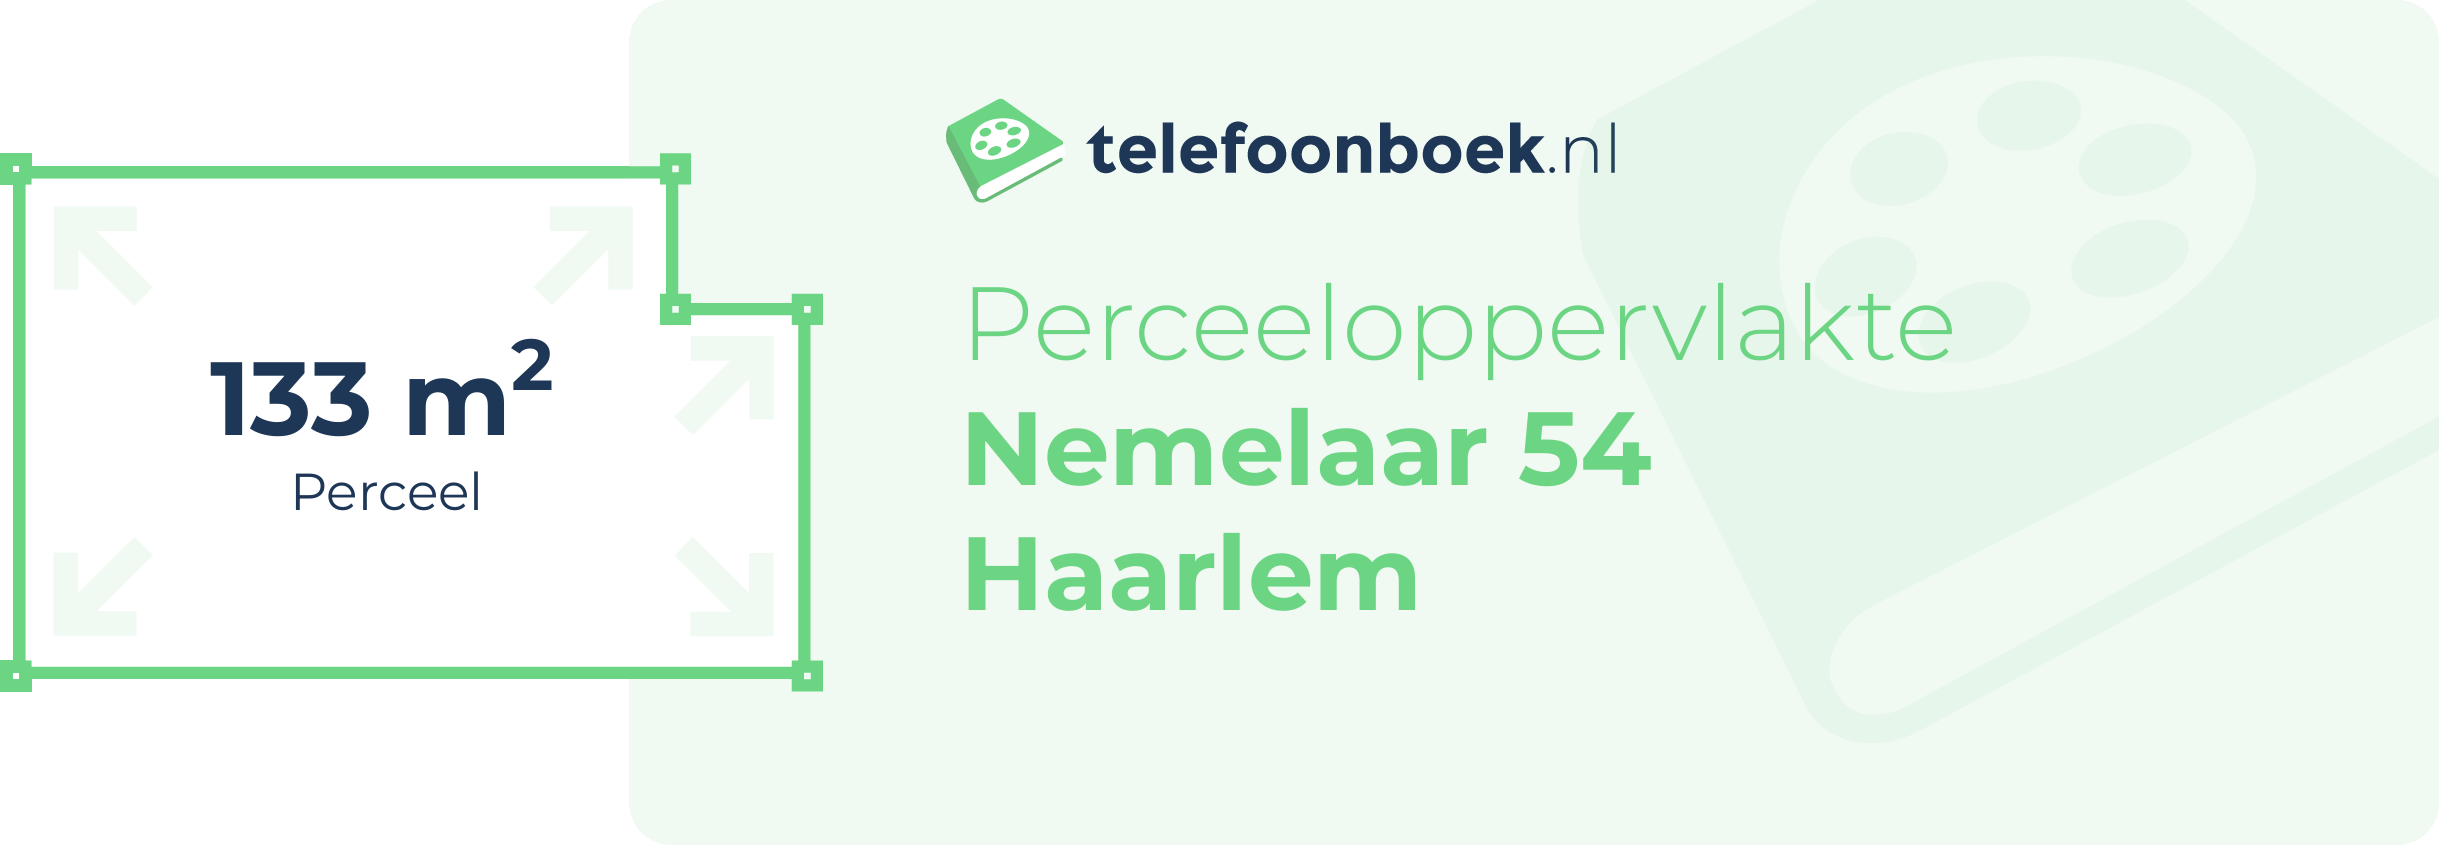 Perceeloppervlakte Nemelaar 54 Haarlem